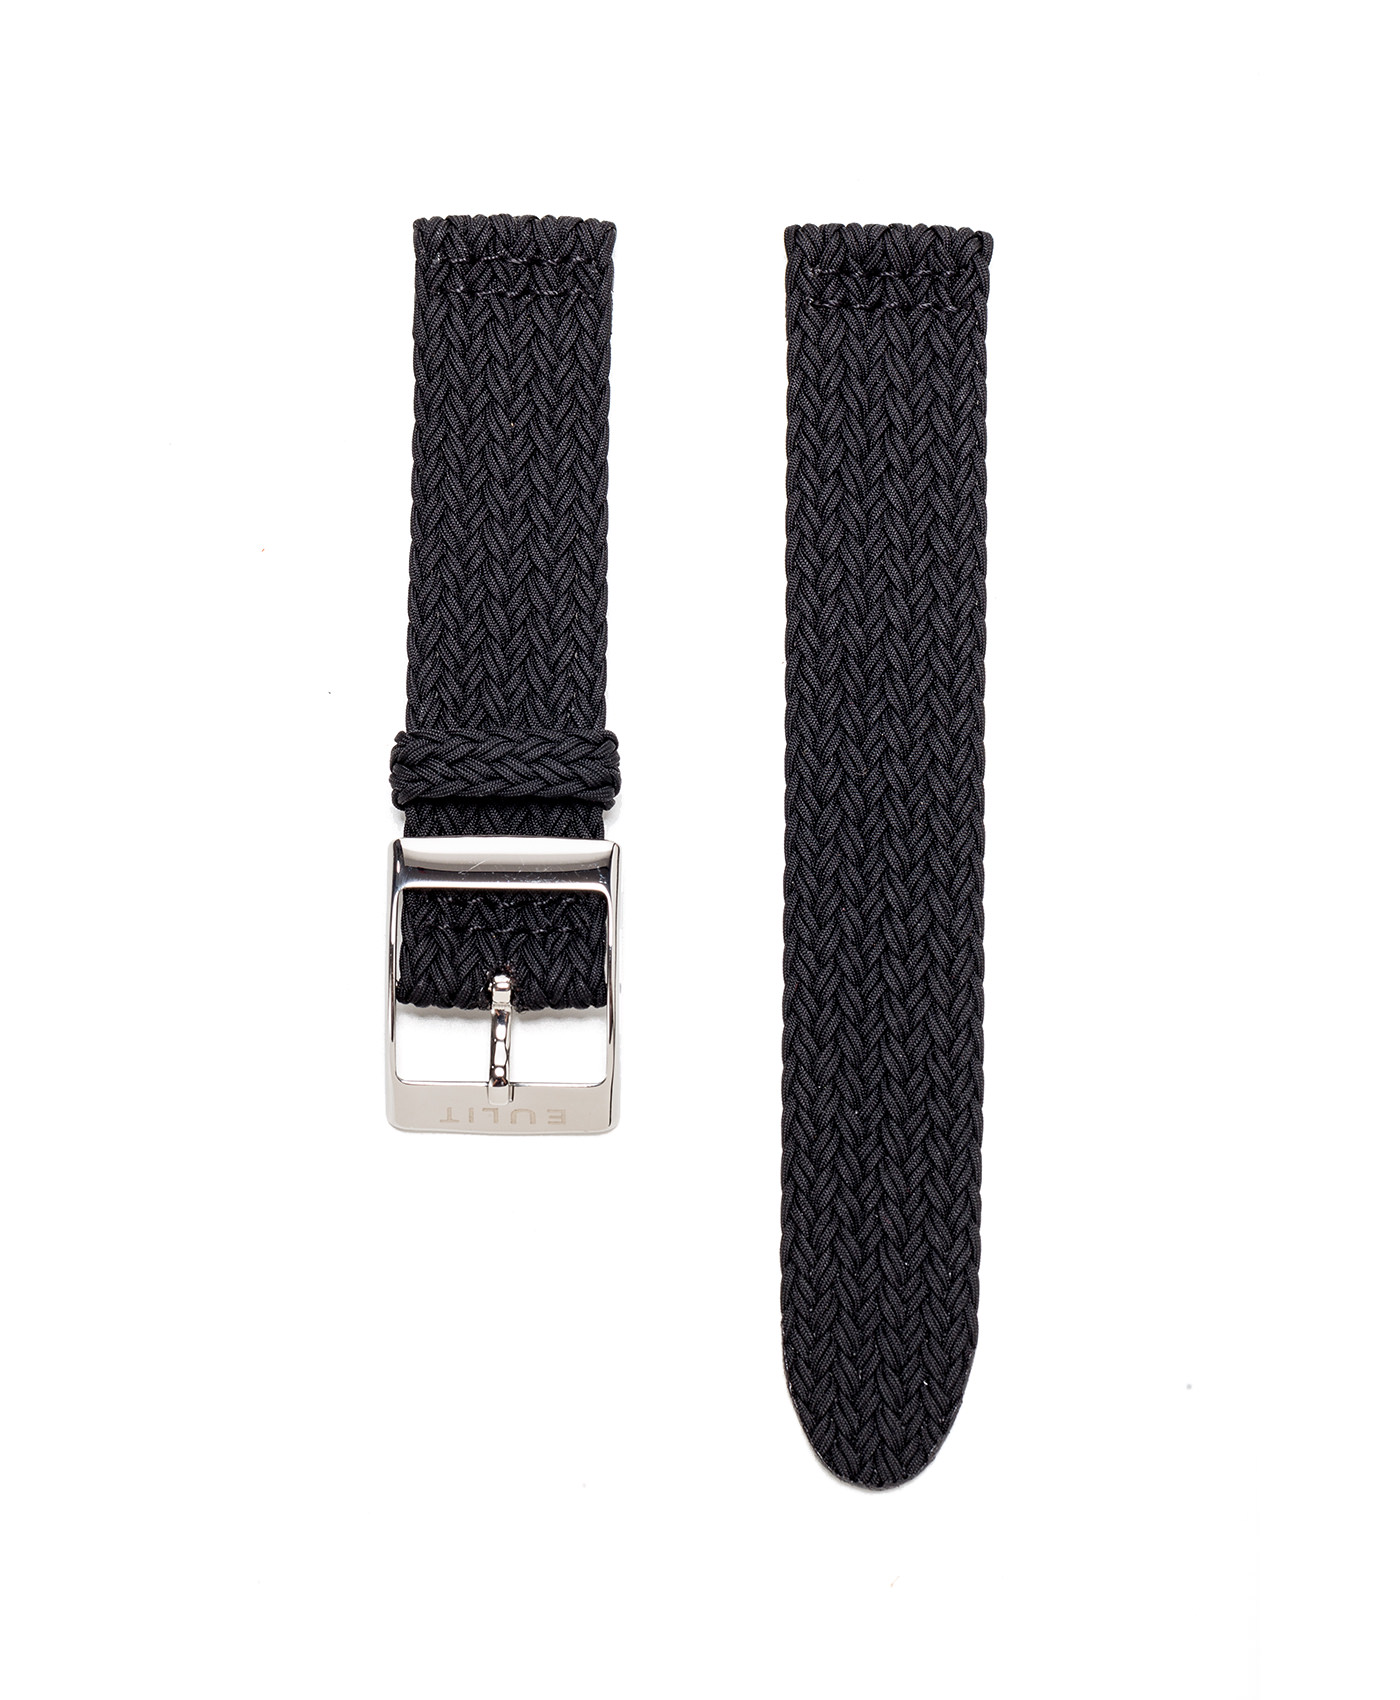 Neu hochwertiges Elysee Uhrenband Uhrenarmband Leder Black 22mm E55 